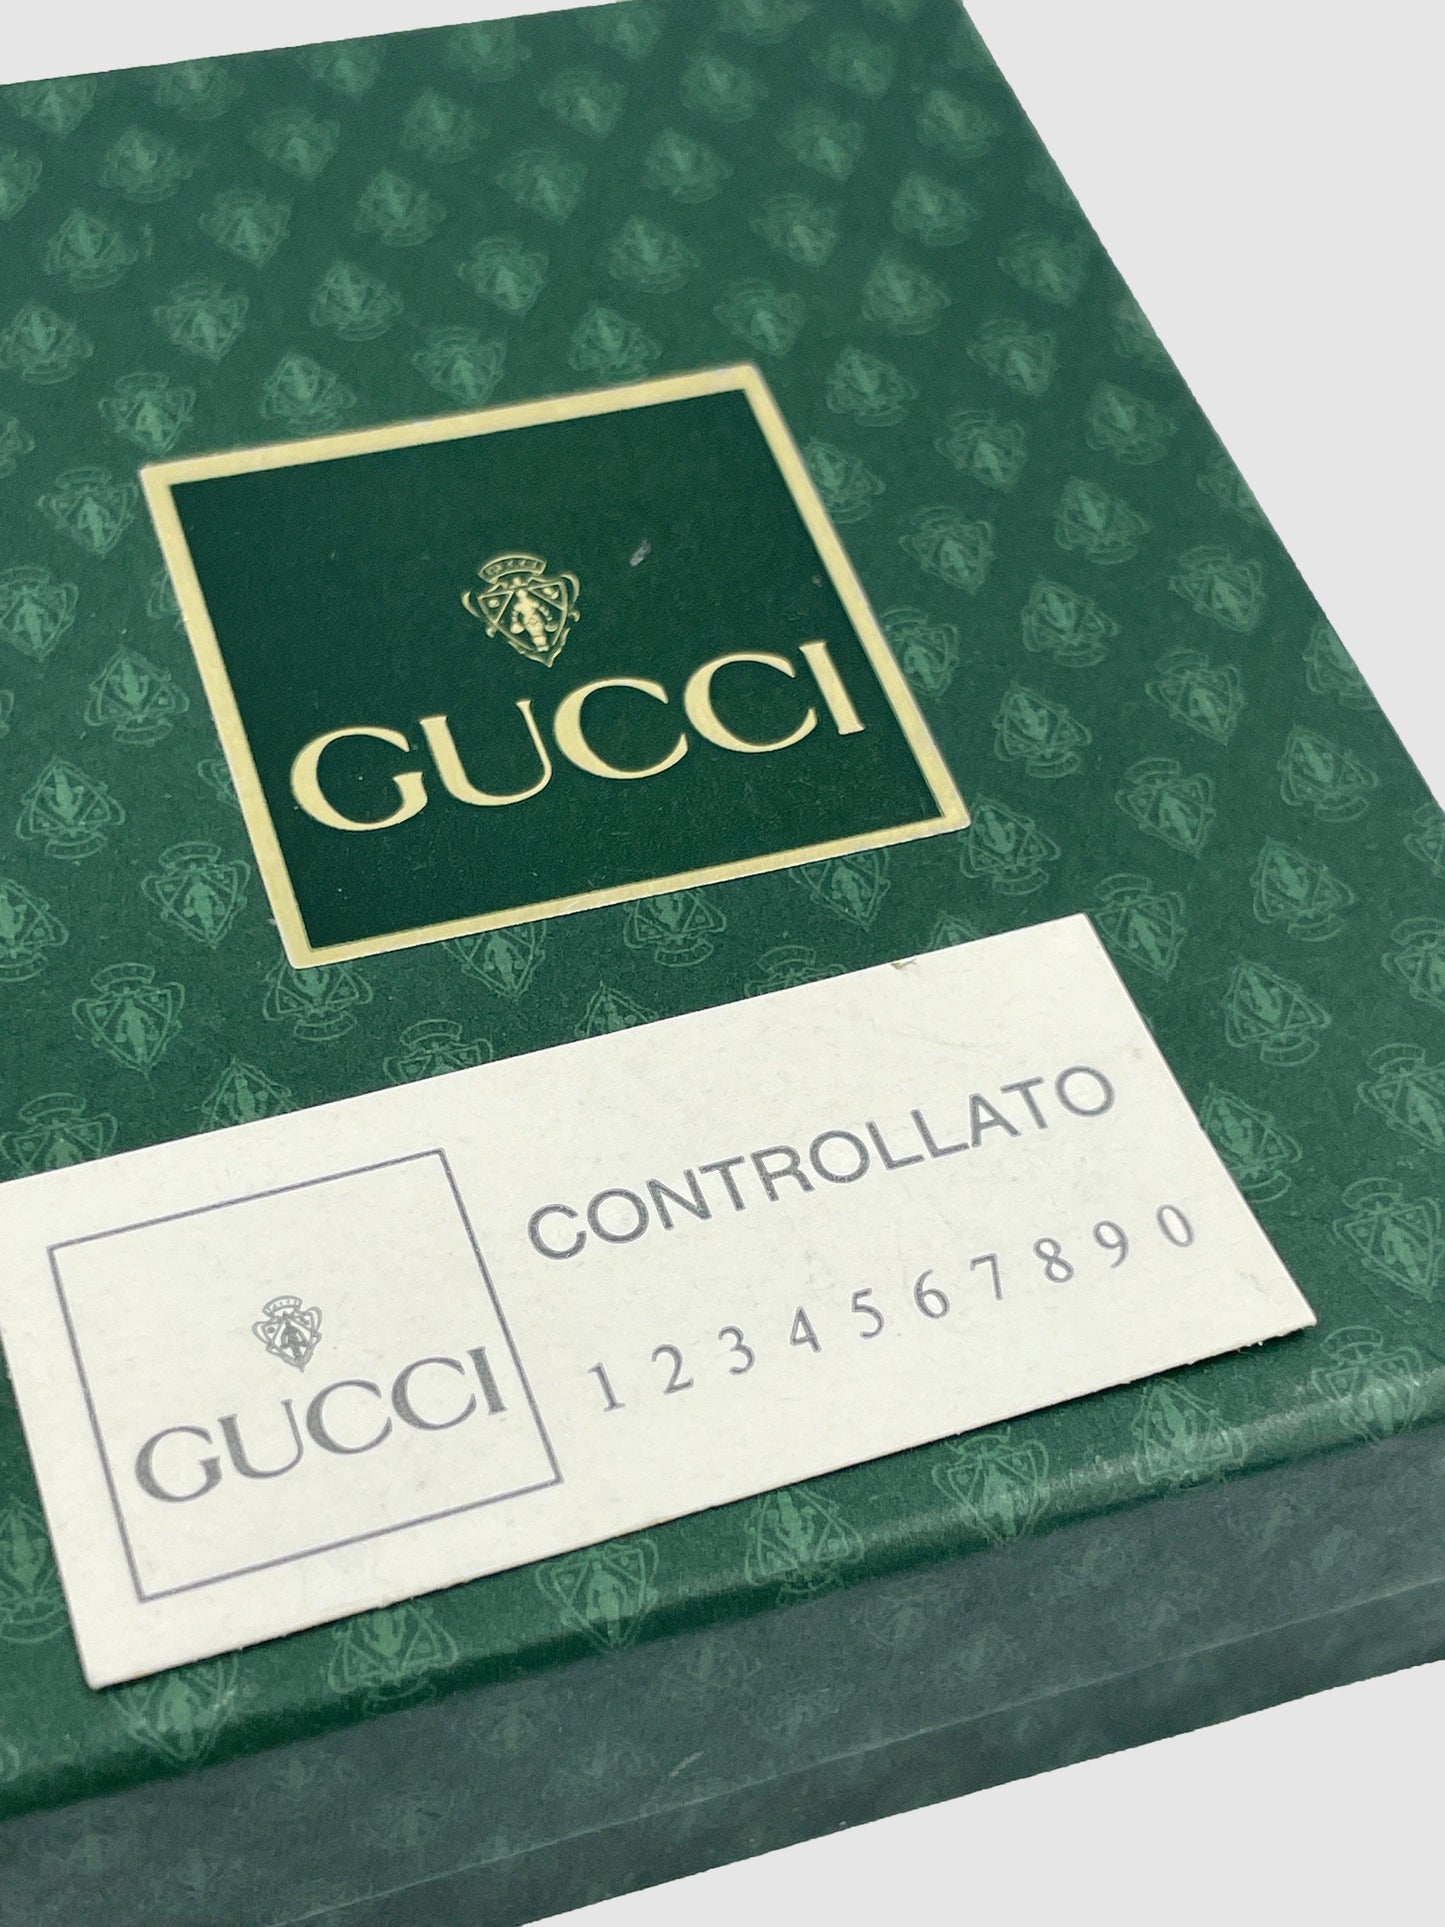 Gucci 1991 - Second Nature Boutique